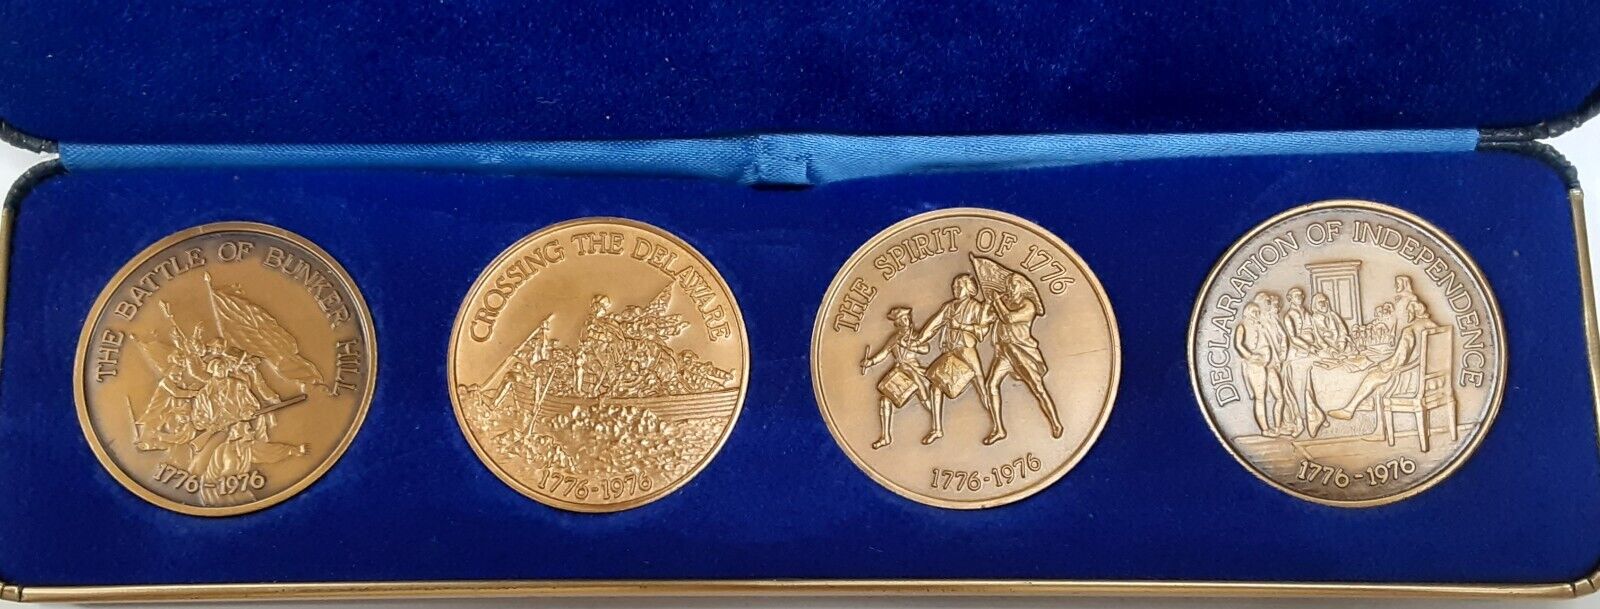 1976 Hamilton Mint Bicentennial Medal Set - 4 Different Pieces in Case w/COA